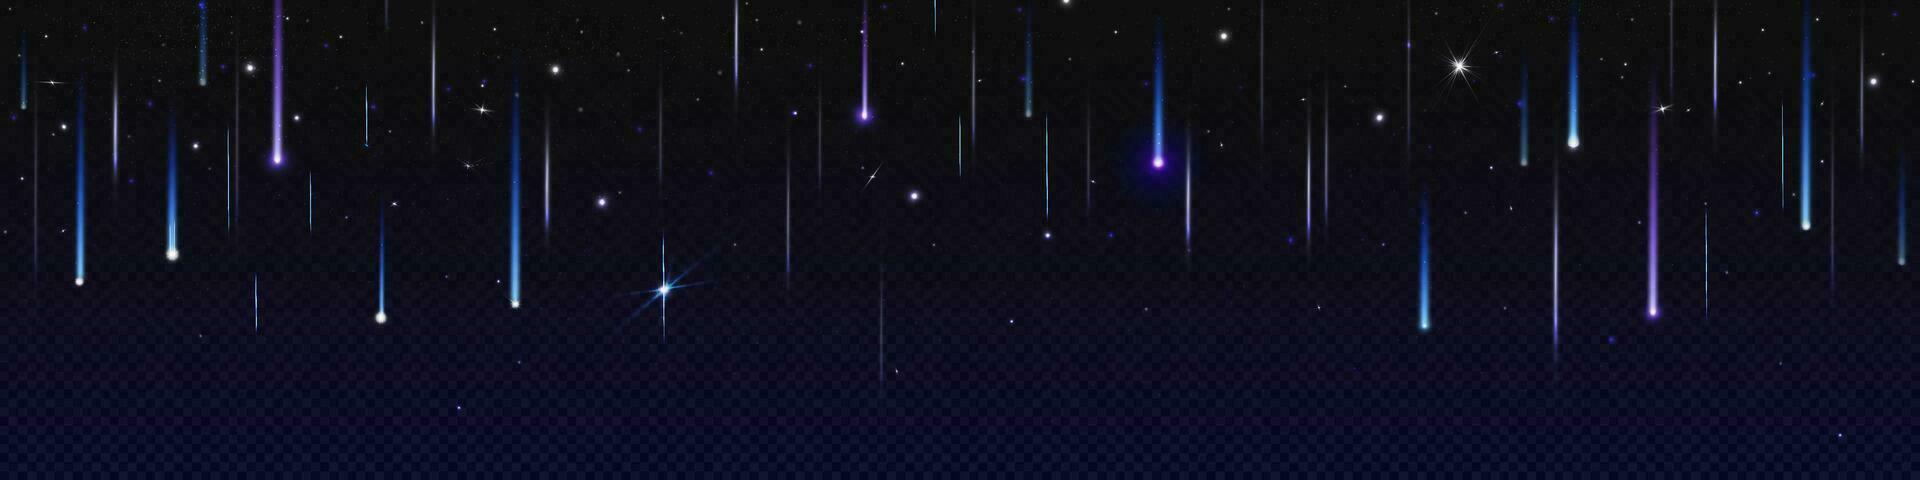 Realistic star shower on dark night sky vector